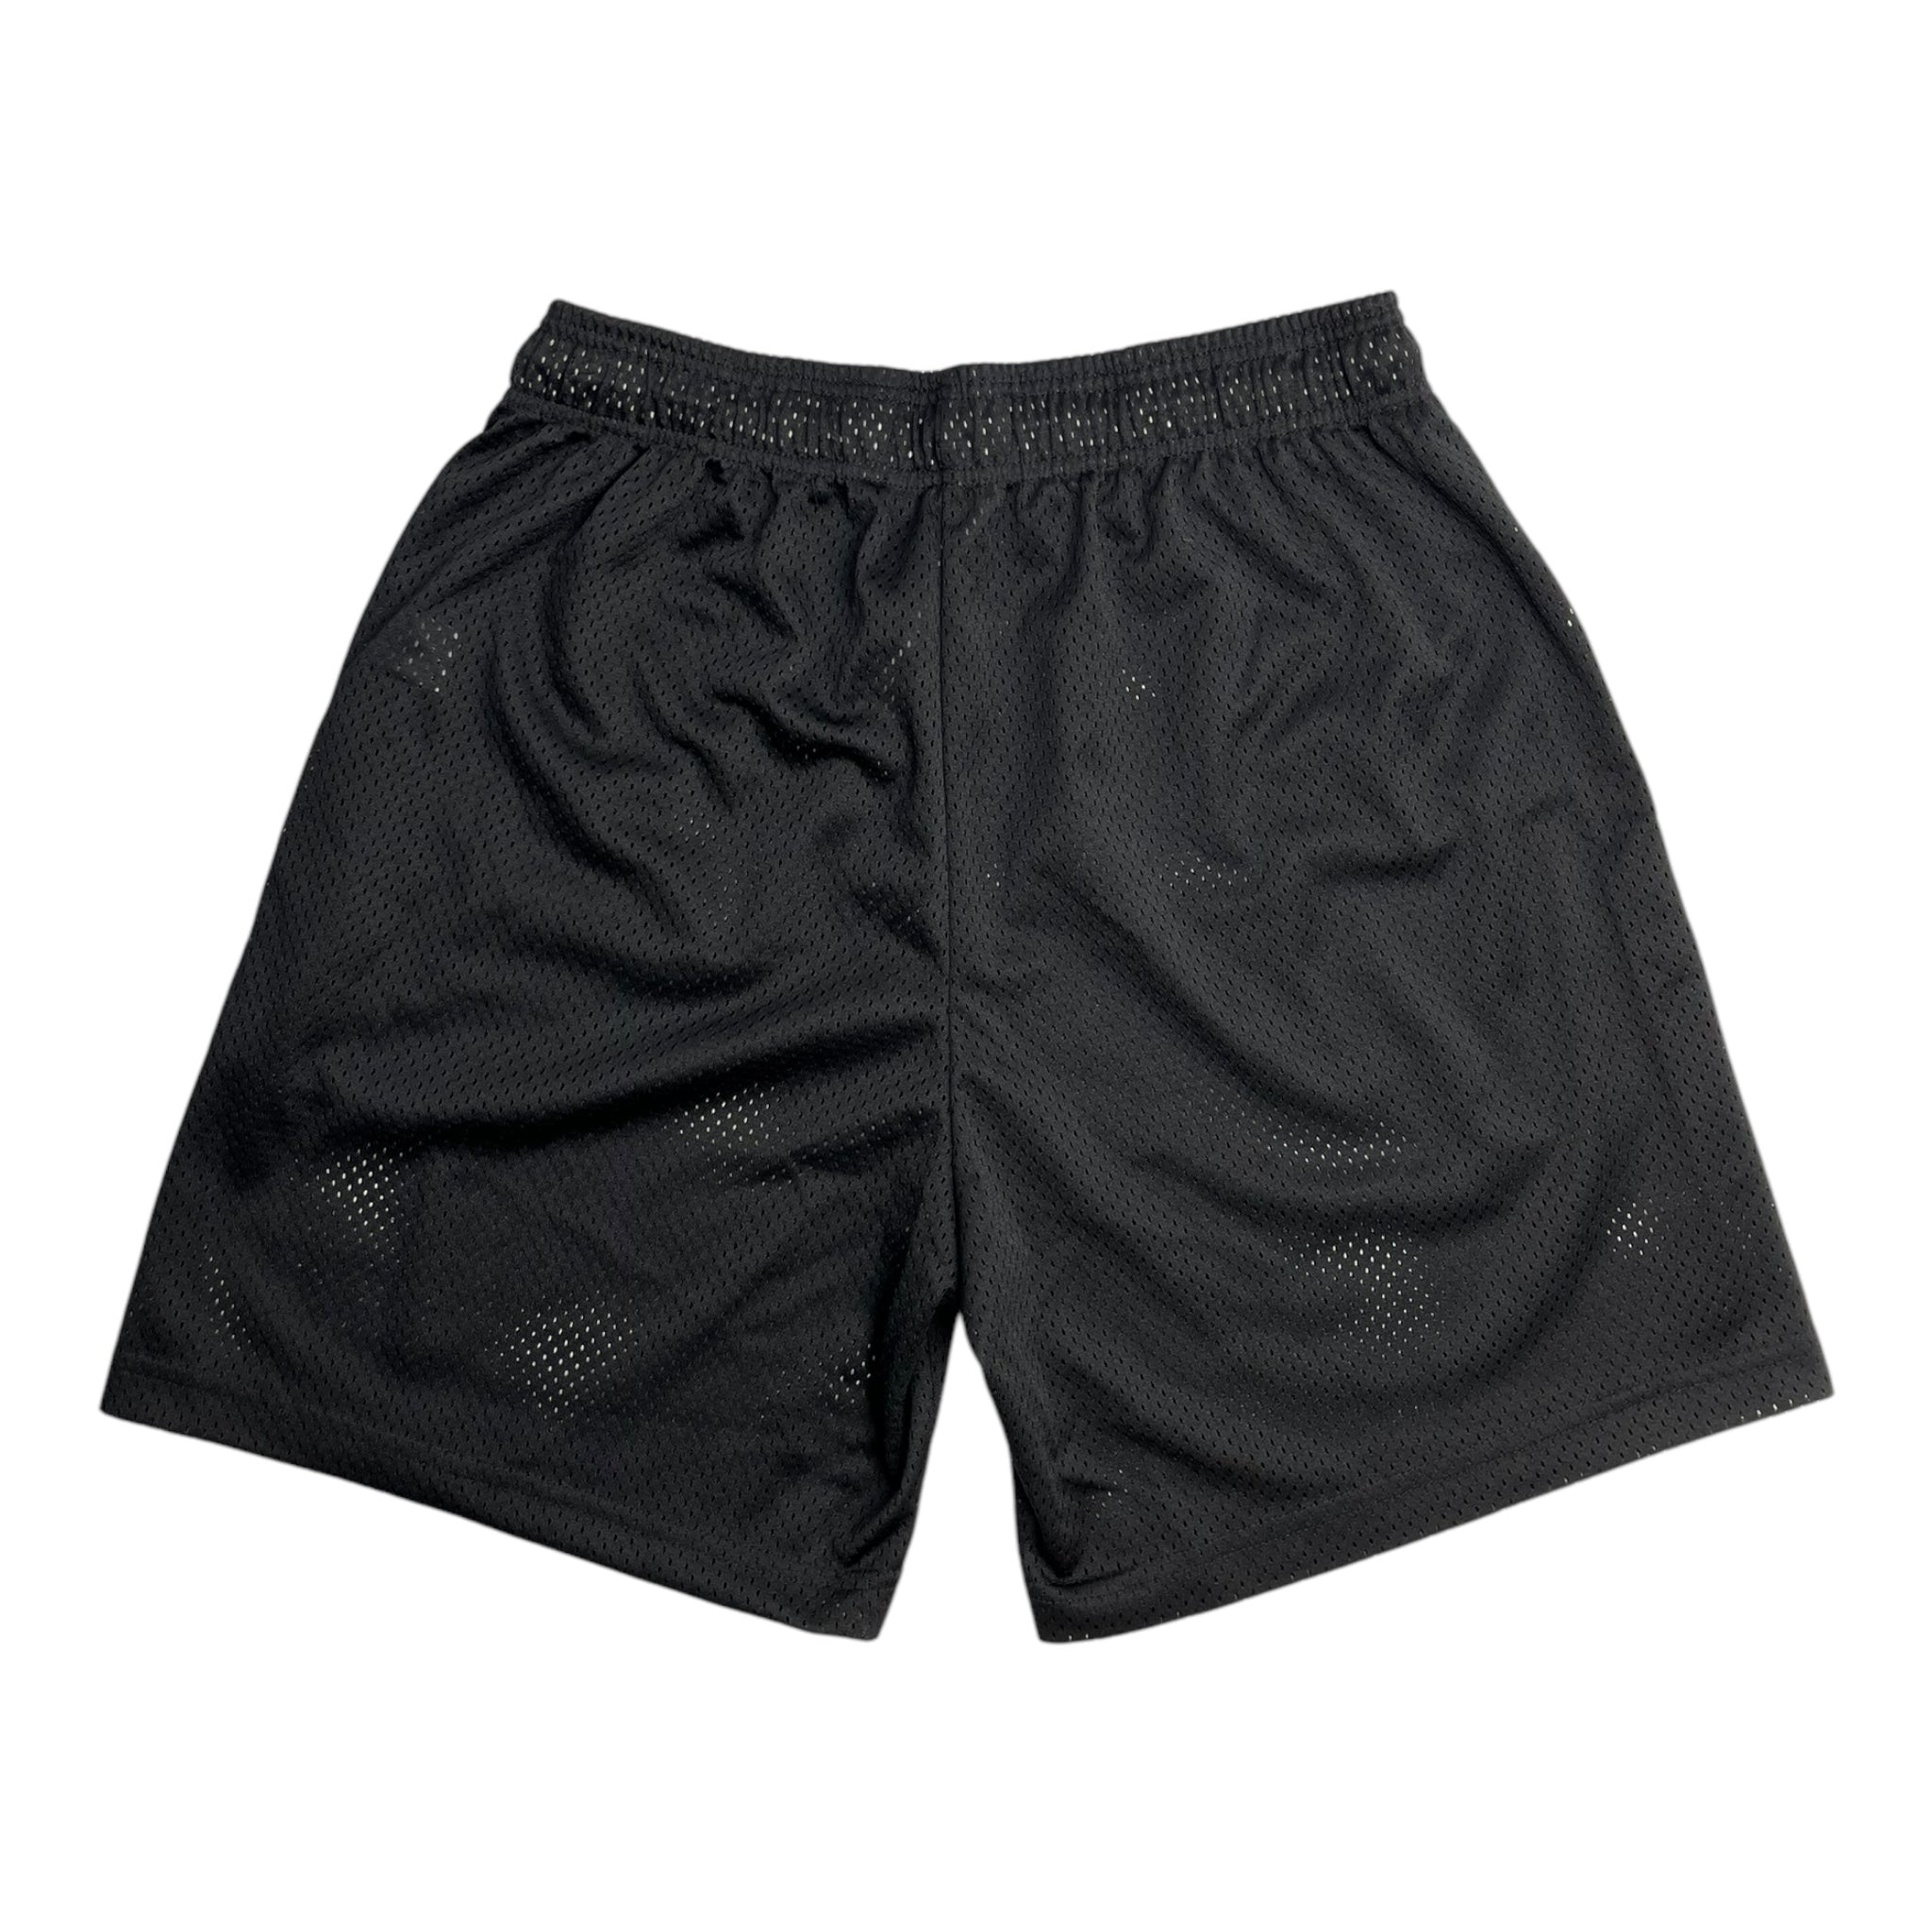 Eric Emanuel Classic Mesh Shorts Black Logo Black